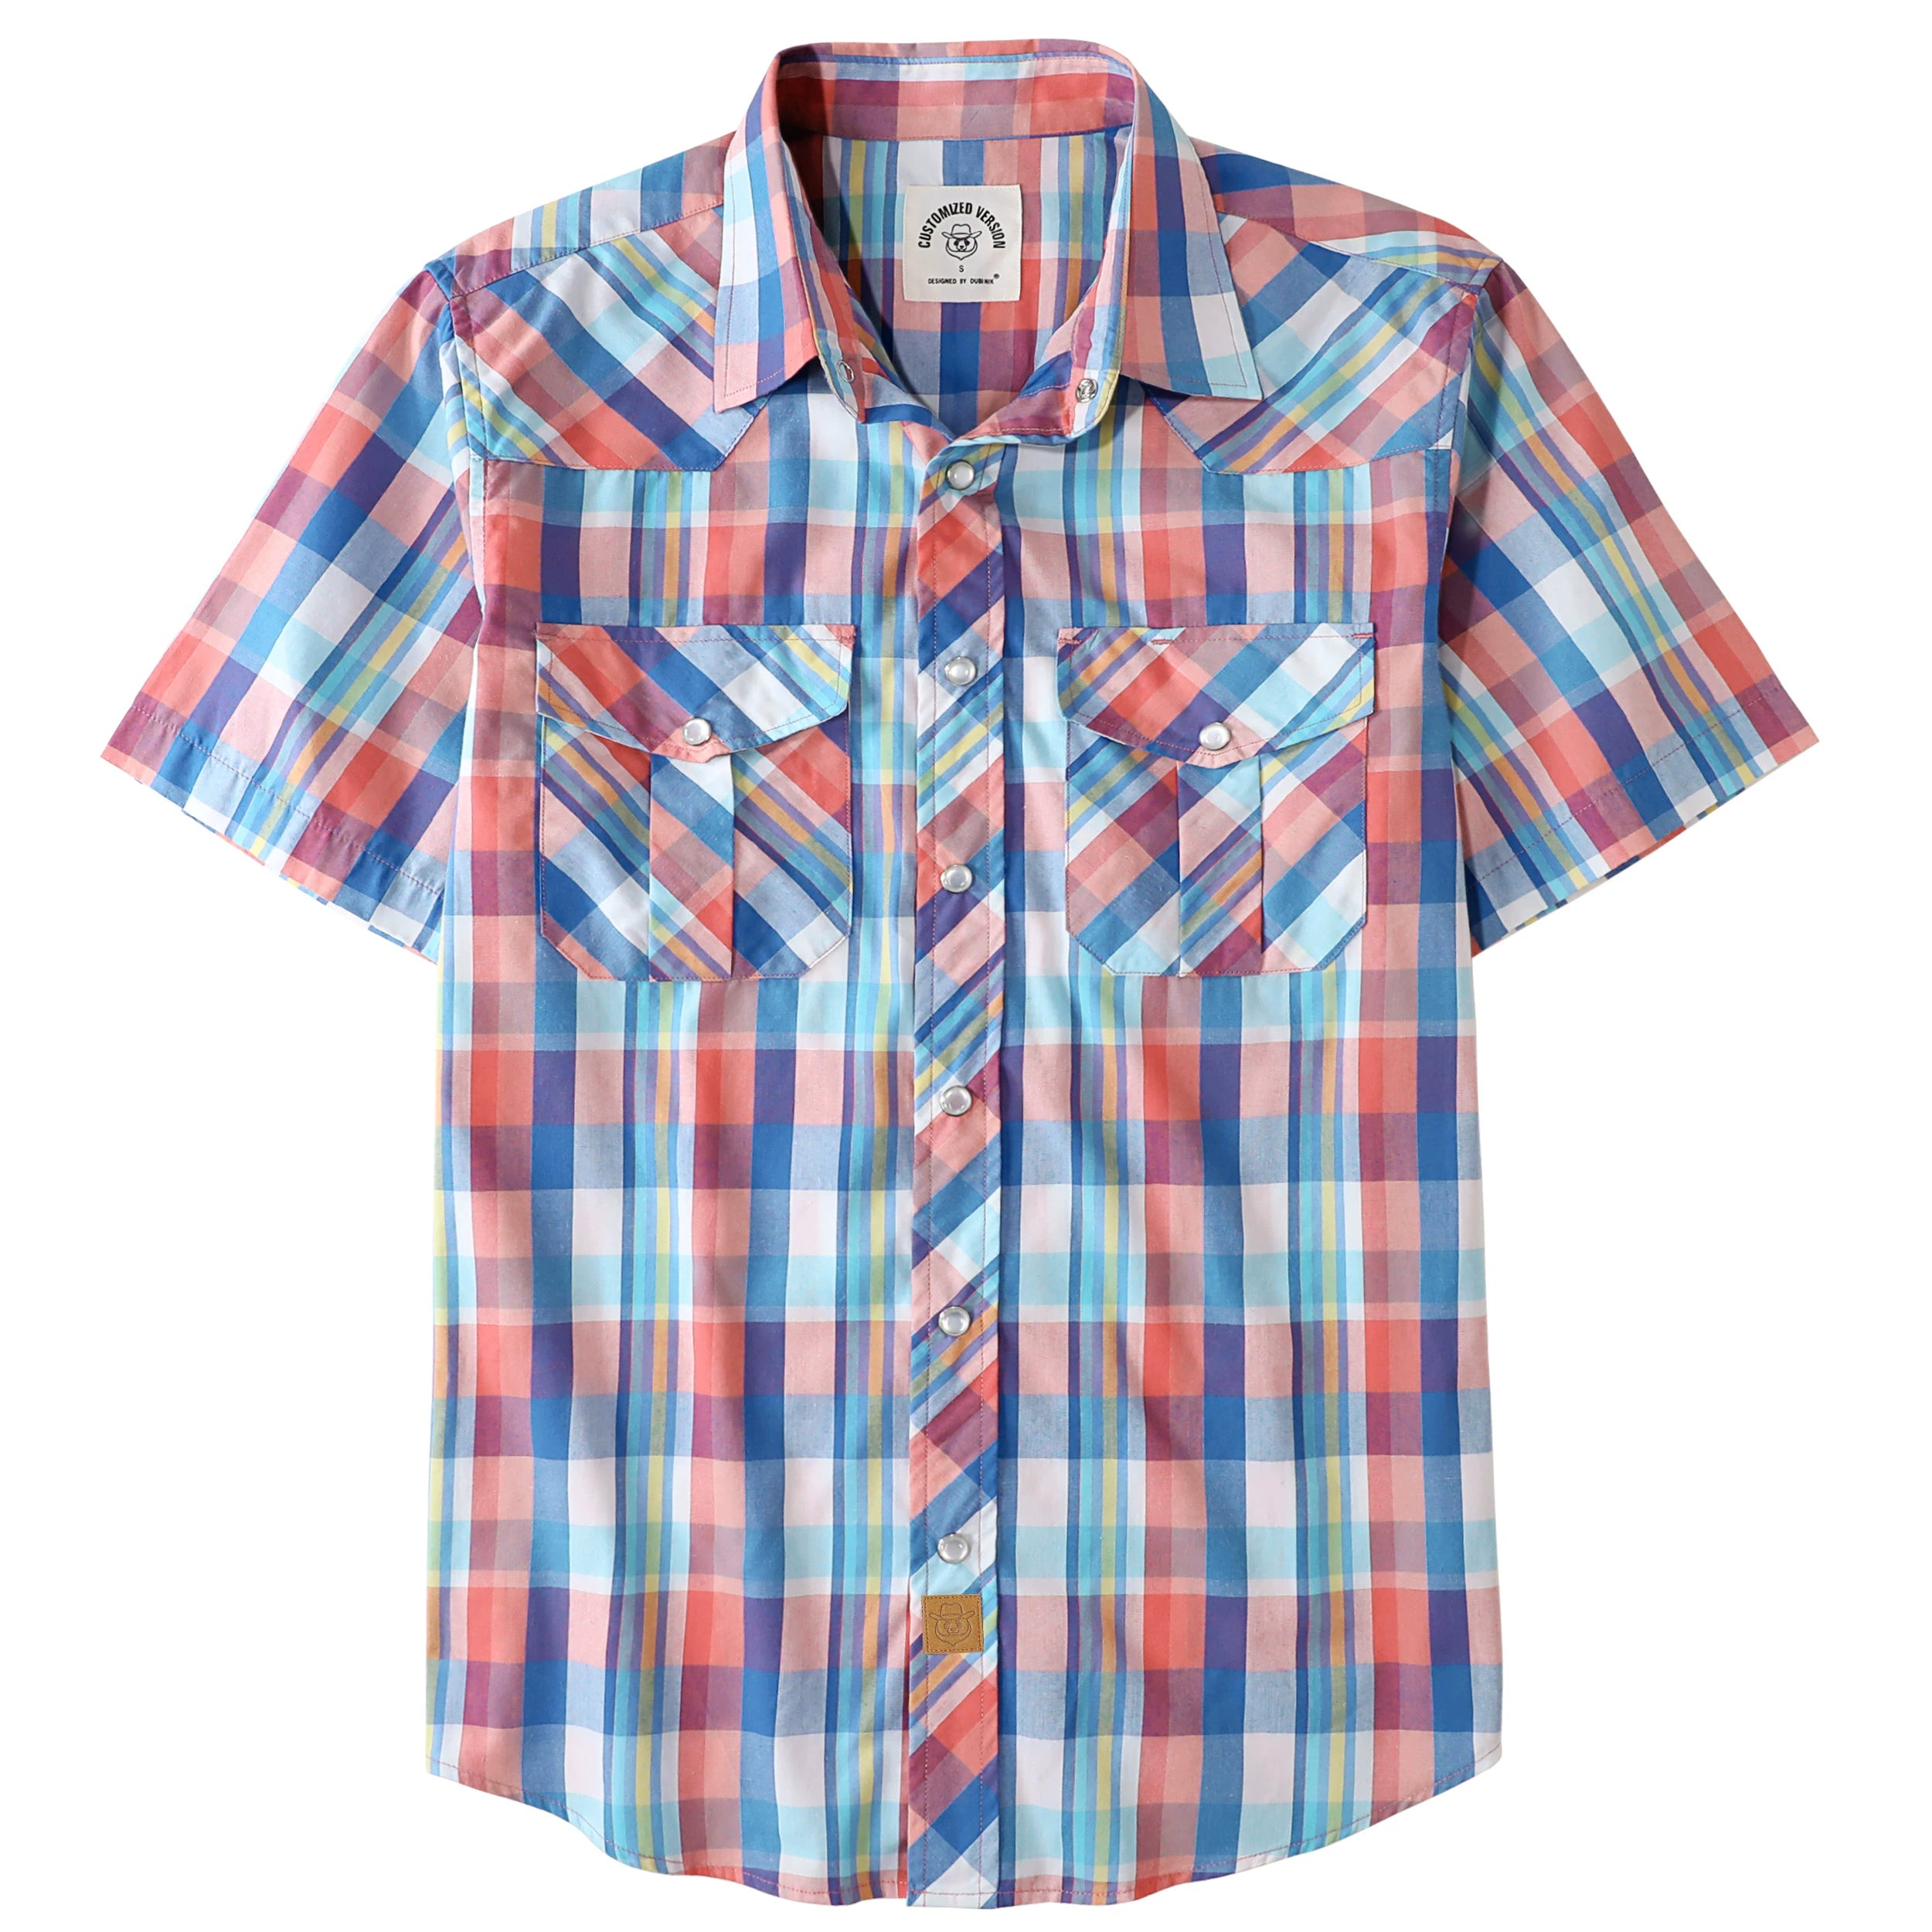 Dubinik® Western Shirts for Men Short Sleeve Plaid Pearl Snap Shirts for Men Button Up Shirt Cowboy Casual Work Shirt#41021